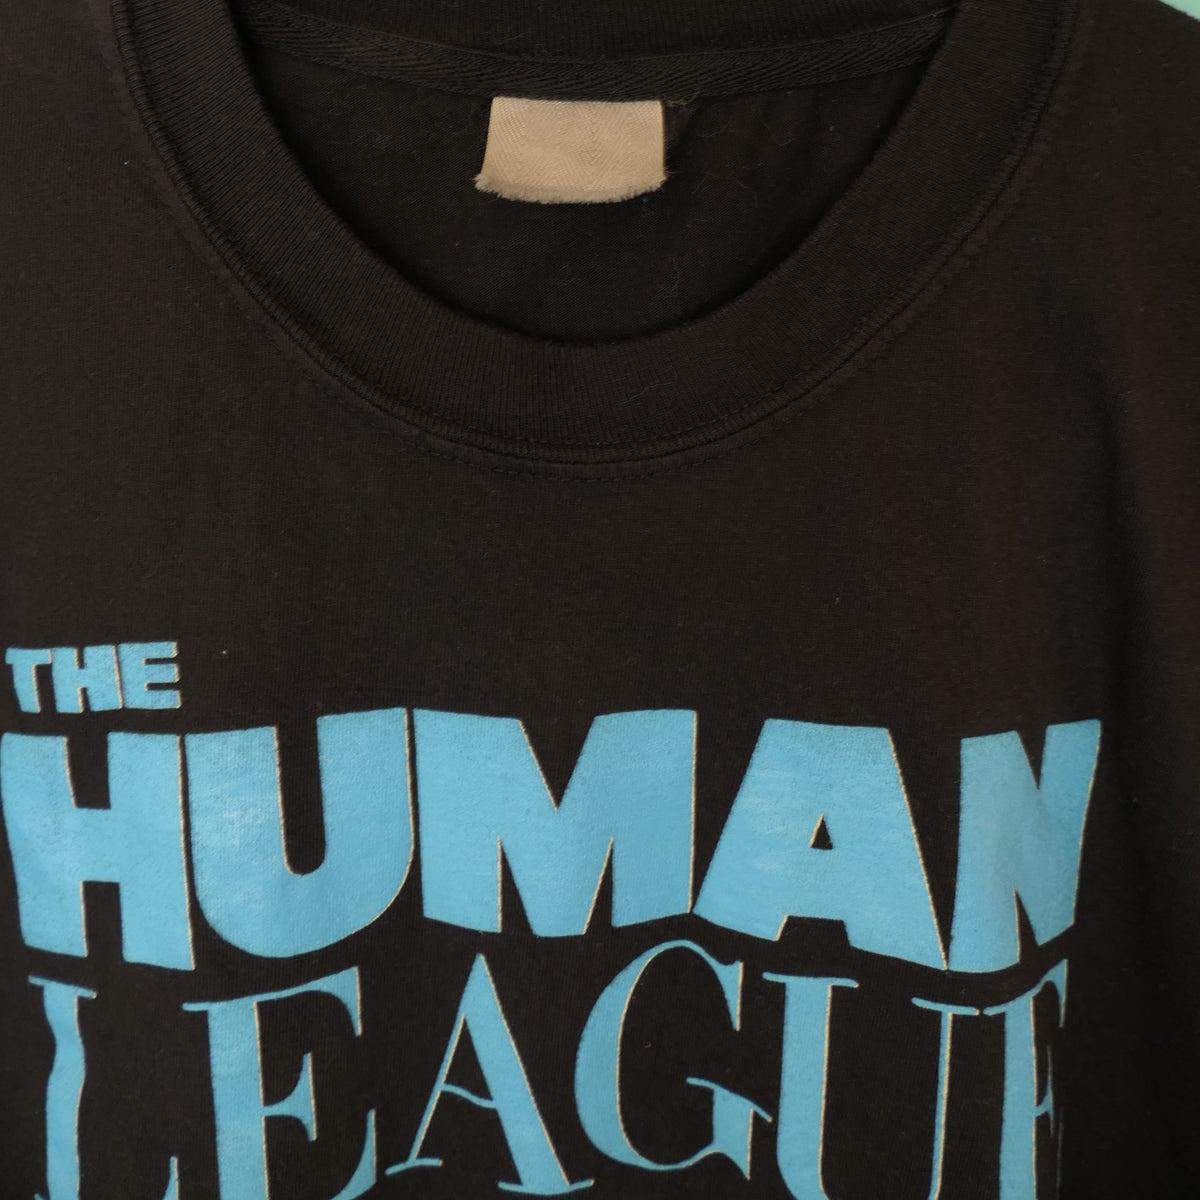 The Human League Tee